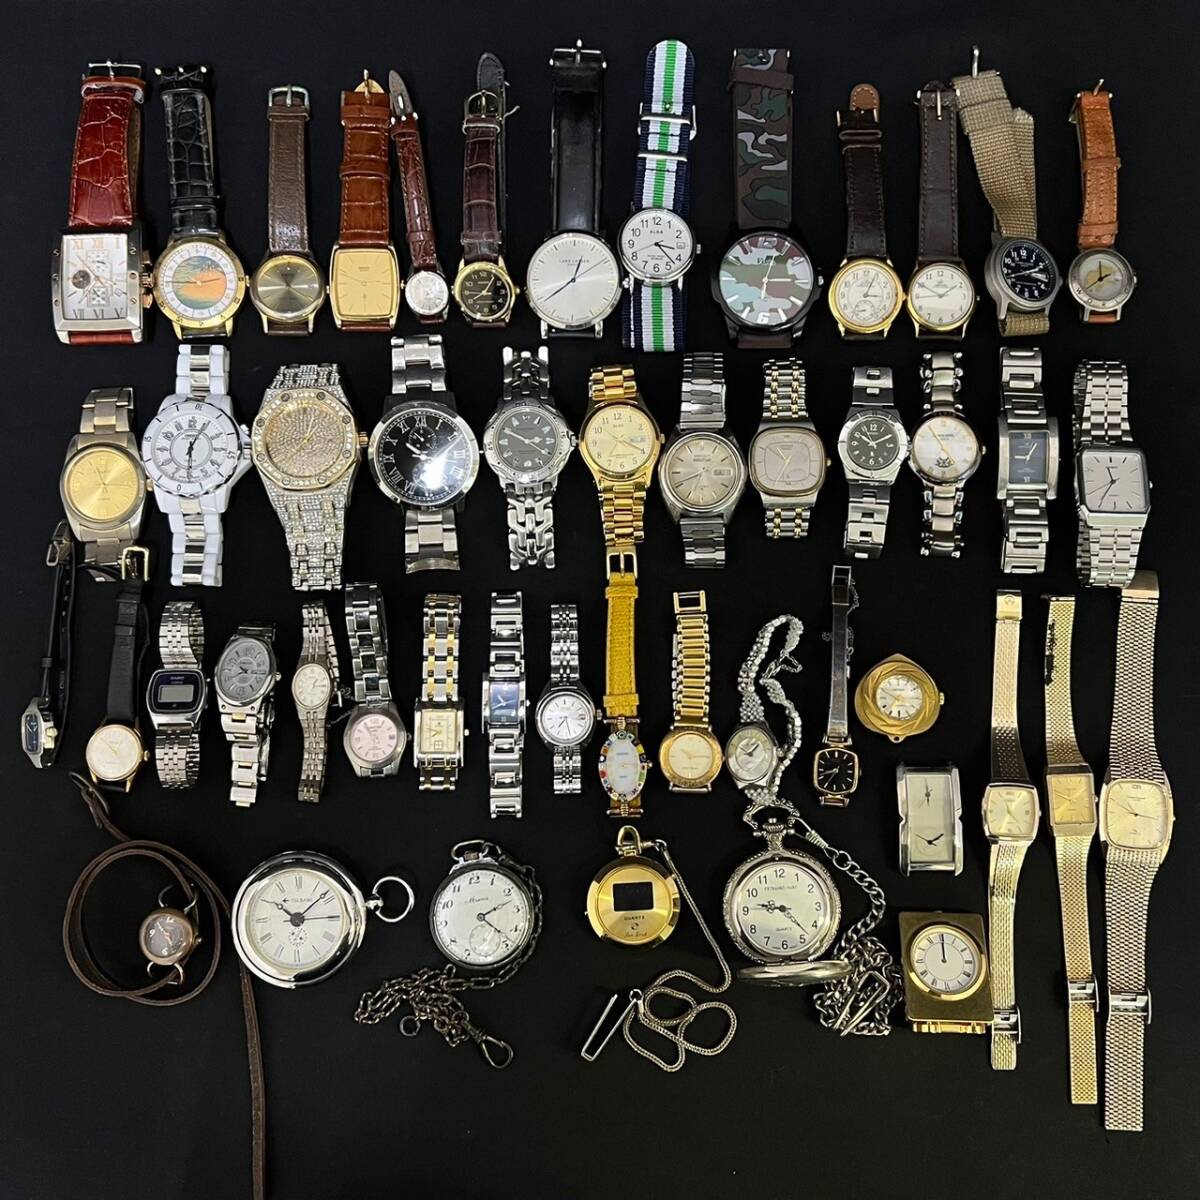 BDg019R 約2.4kg 腕時計 懐中時計 まとめ SEIKO CASIO CITIZEN Dior Courreges ALBA GUESS ACTUS TIMBER CRUISER PIMSLEUR 鉄道 つばめ の画像1